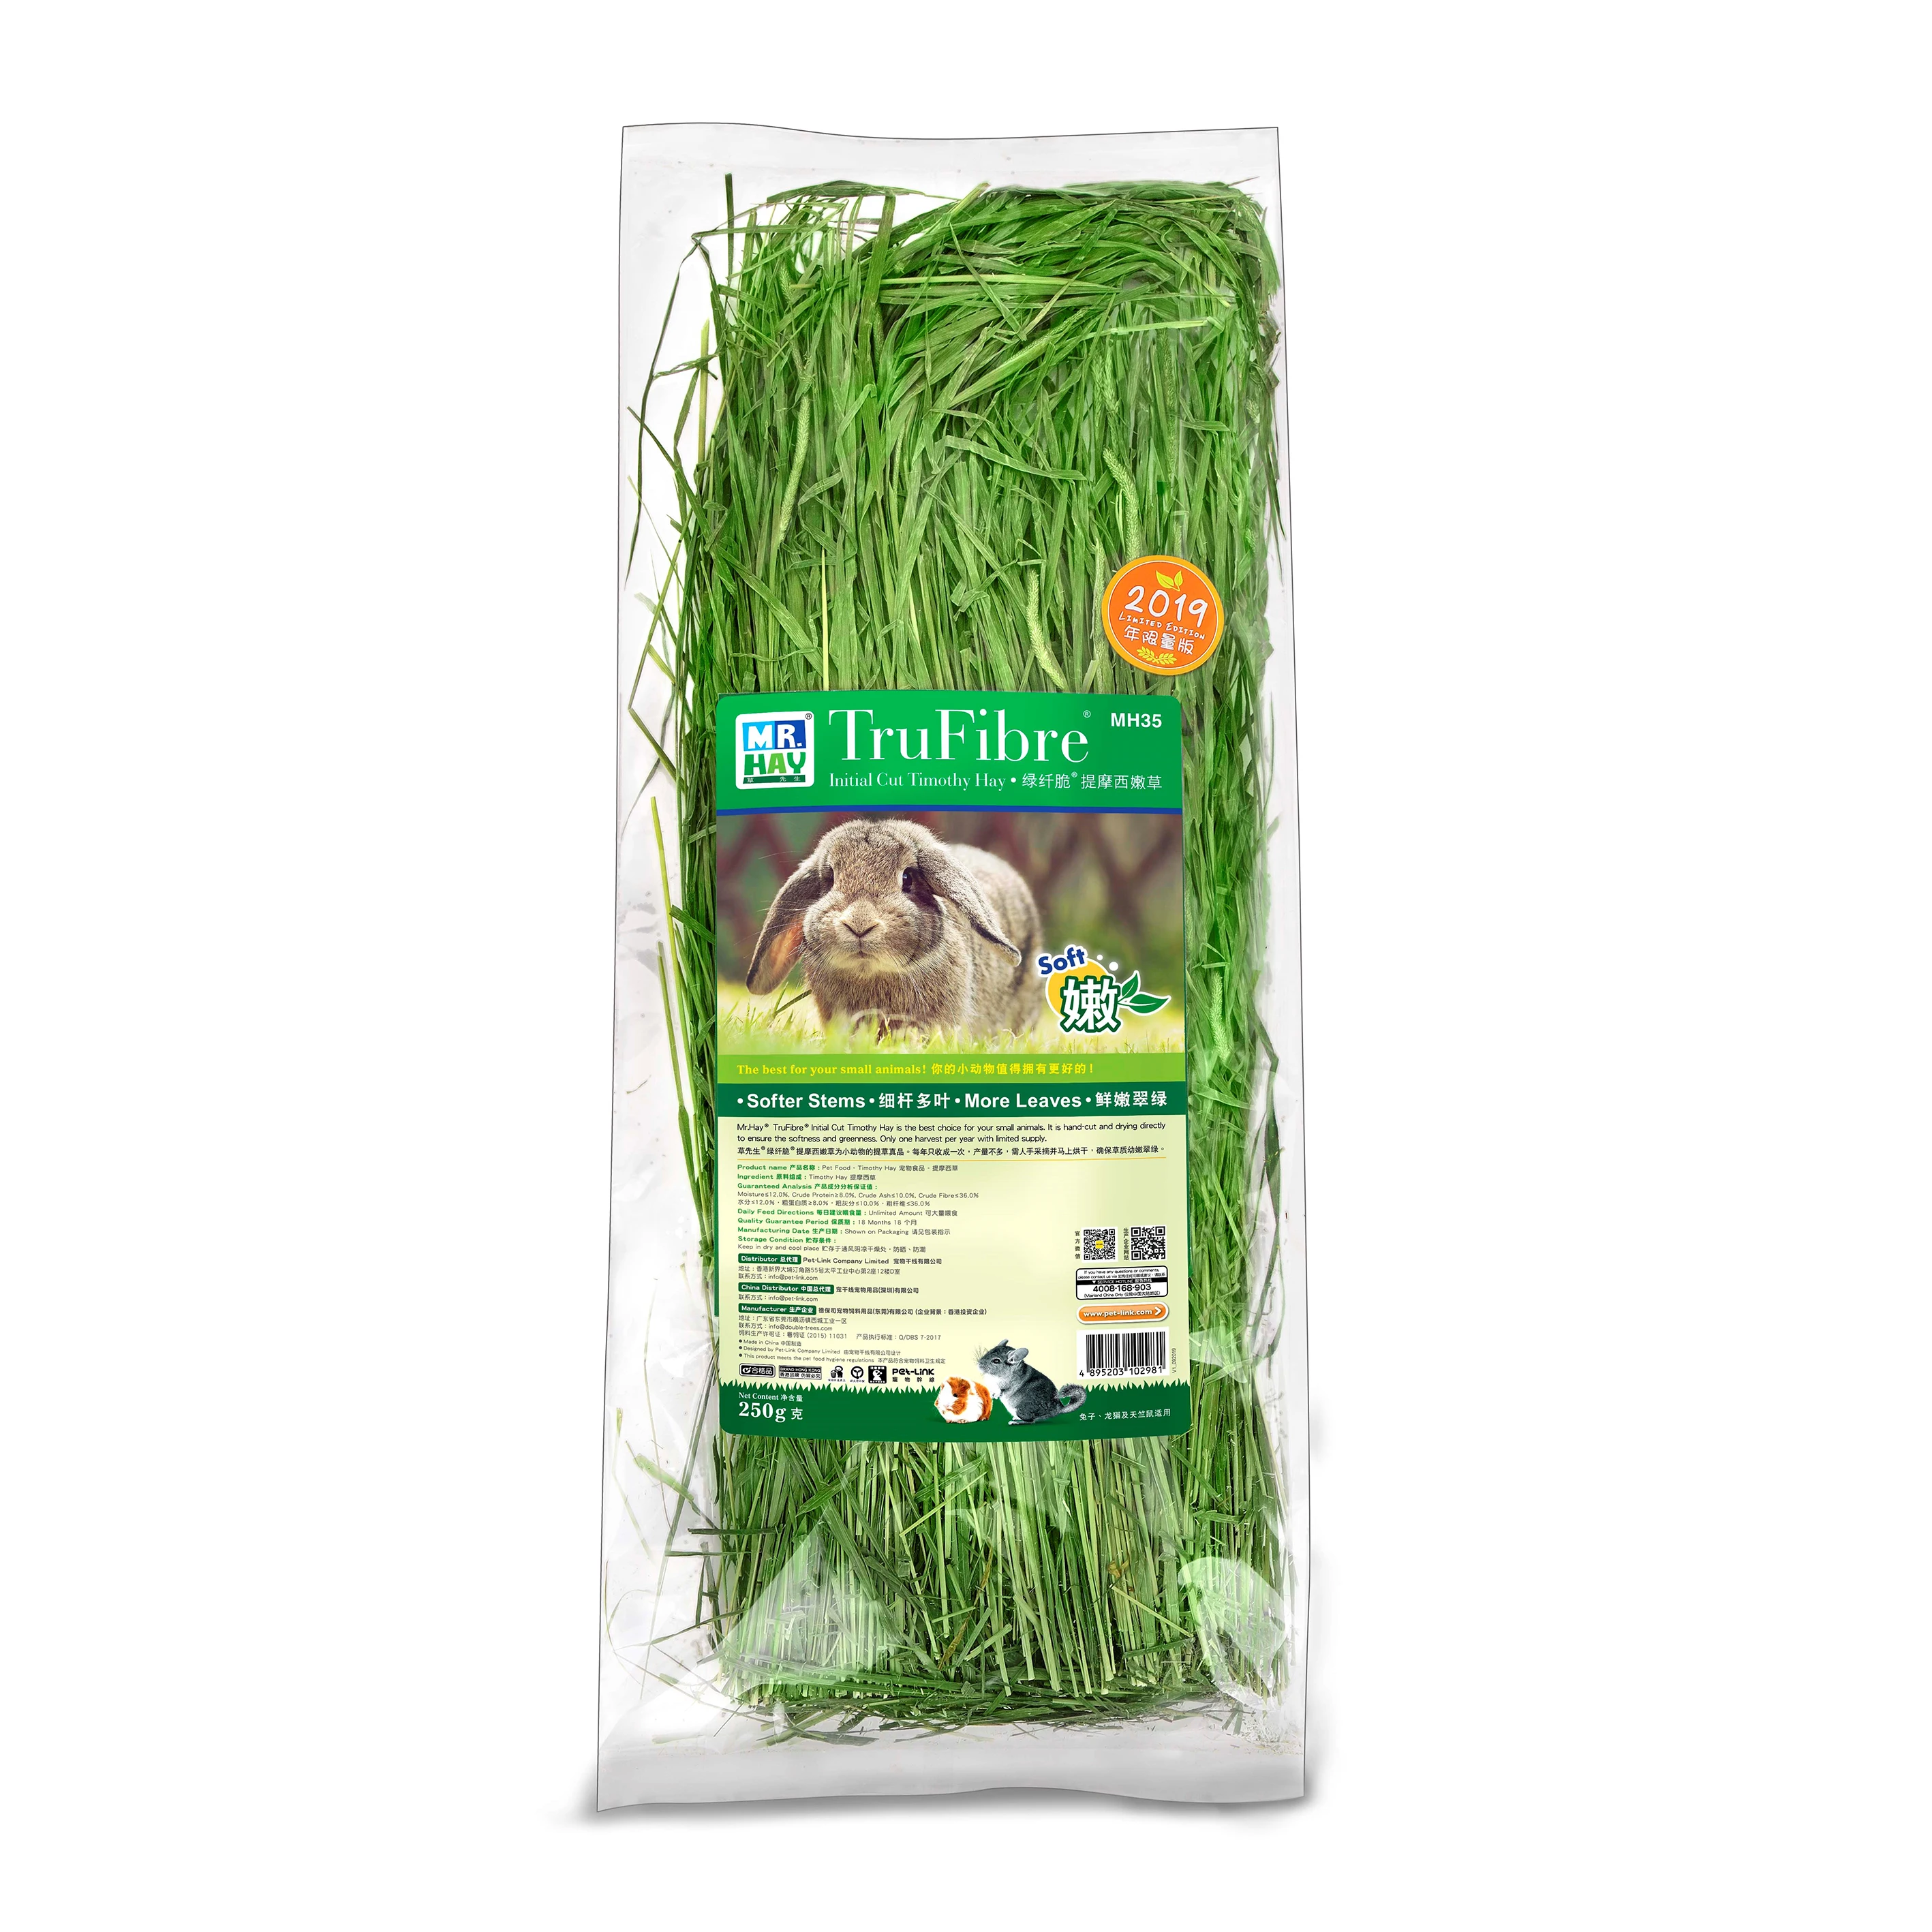 Rabbit Timothy Hay Initial Cut Timothy Hay – 250g Rabbit Feeding Hay For Rabbits